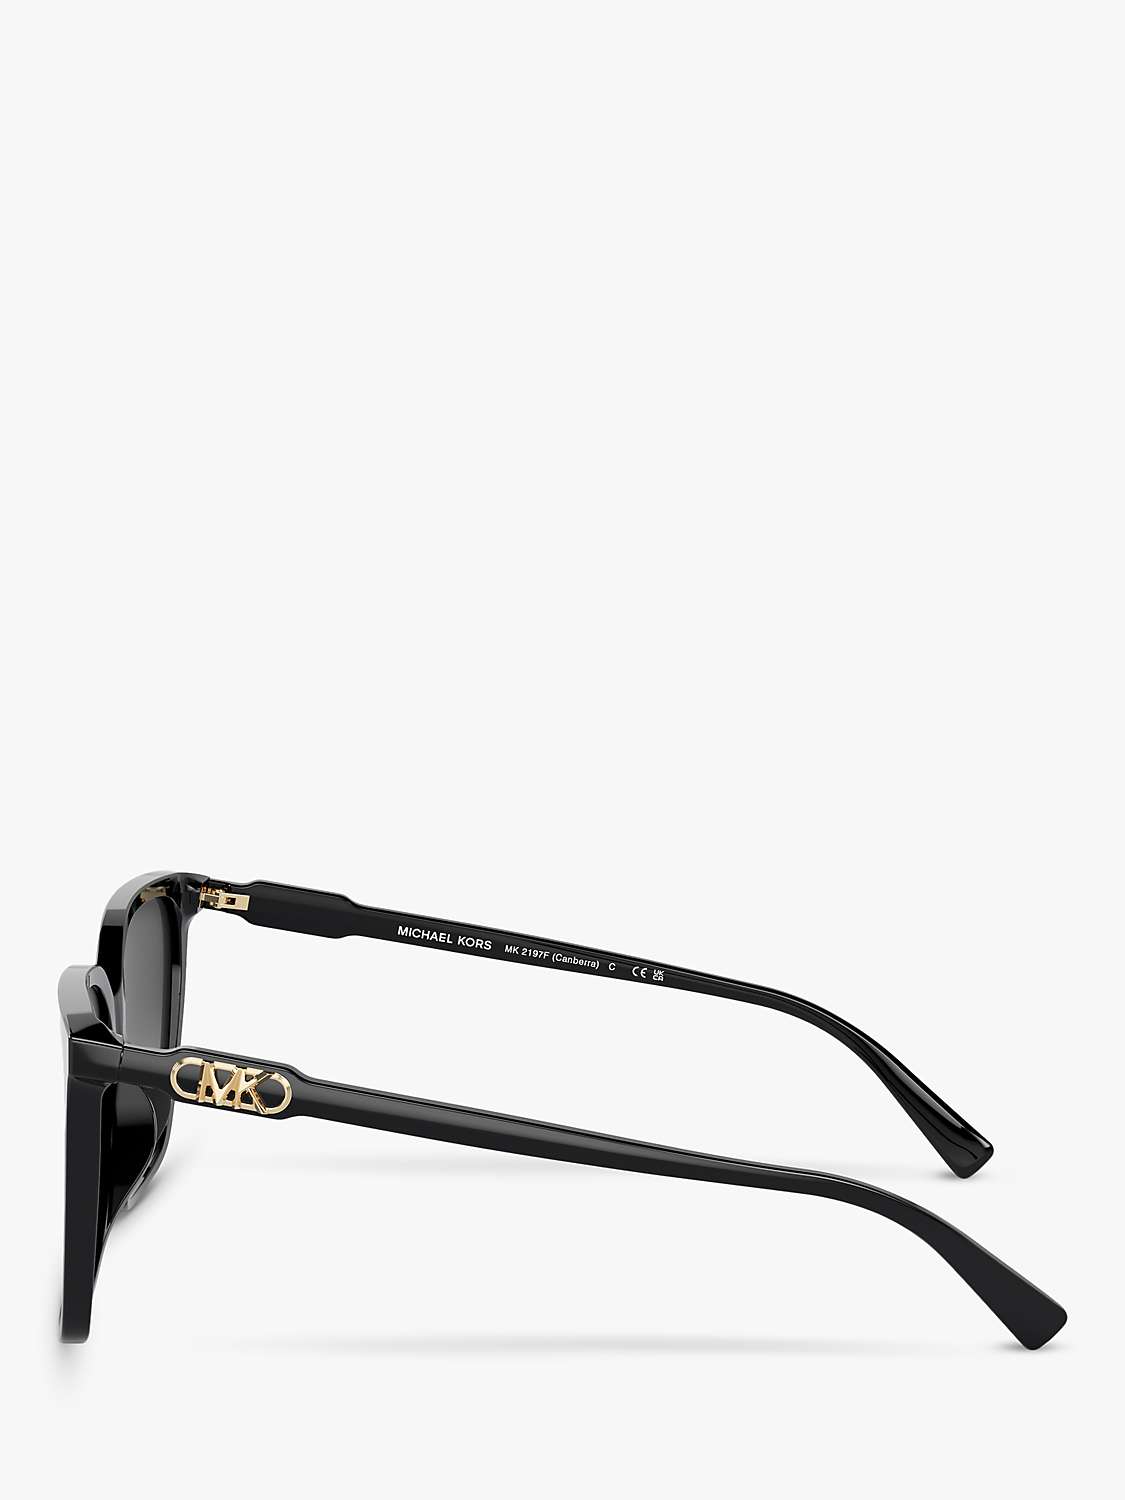 Buy Michael Kors MK2197F Women's Square Sunglasses, Black/Grey Gradient Online at johnlewis.com